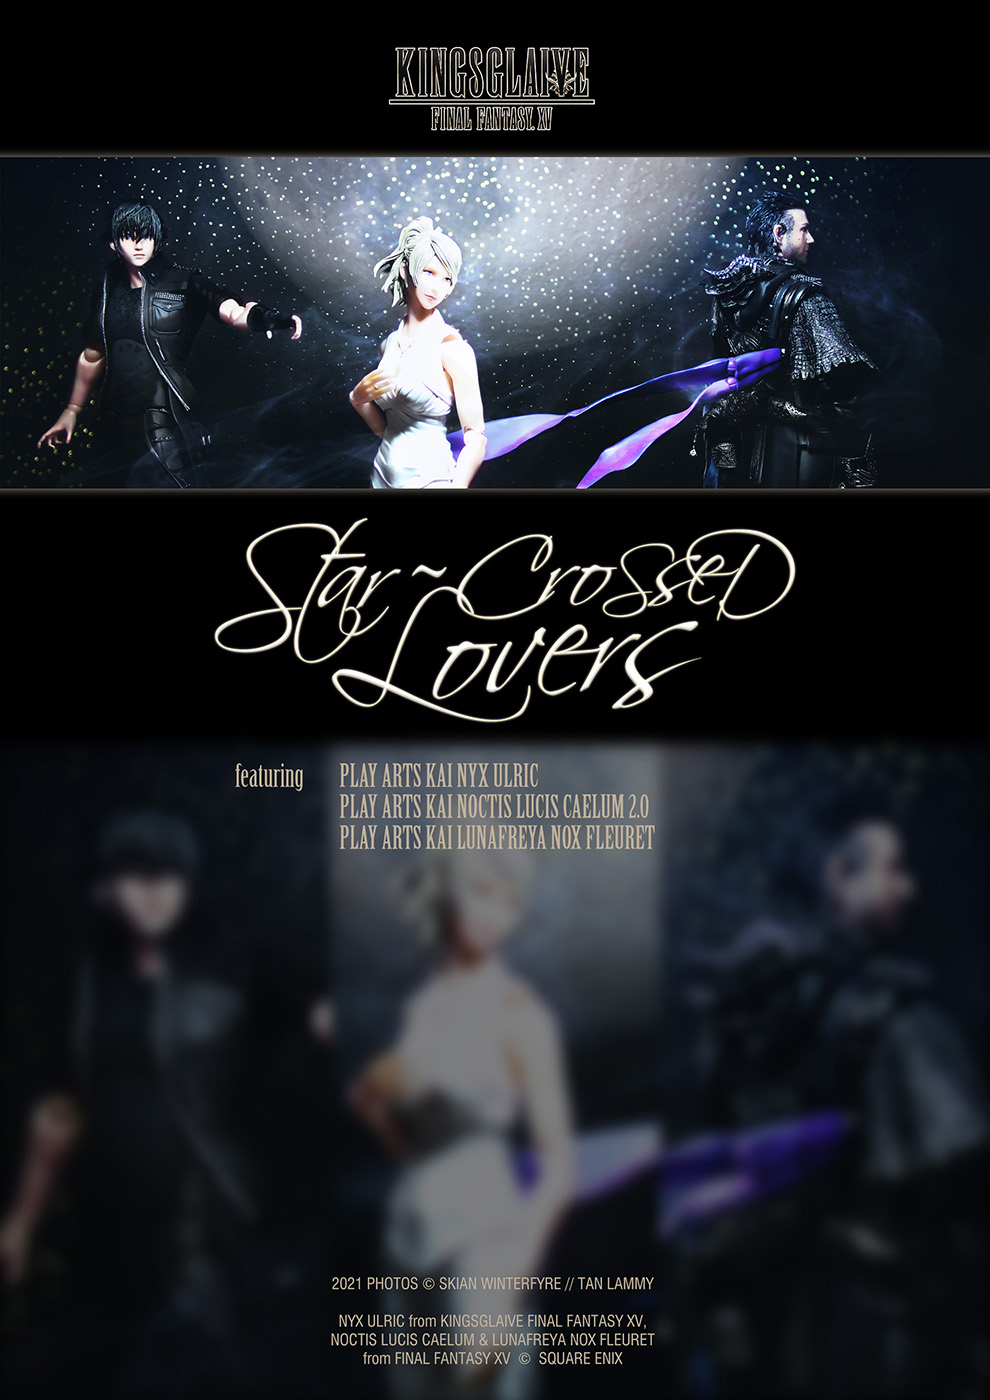 Star-crossed Lovers [photostory cover art]